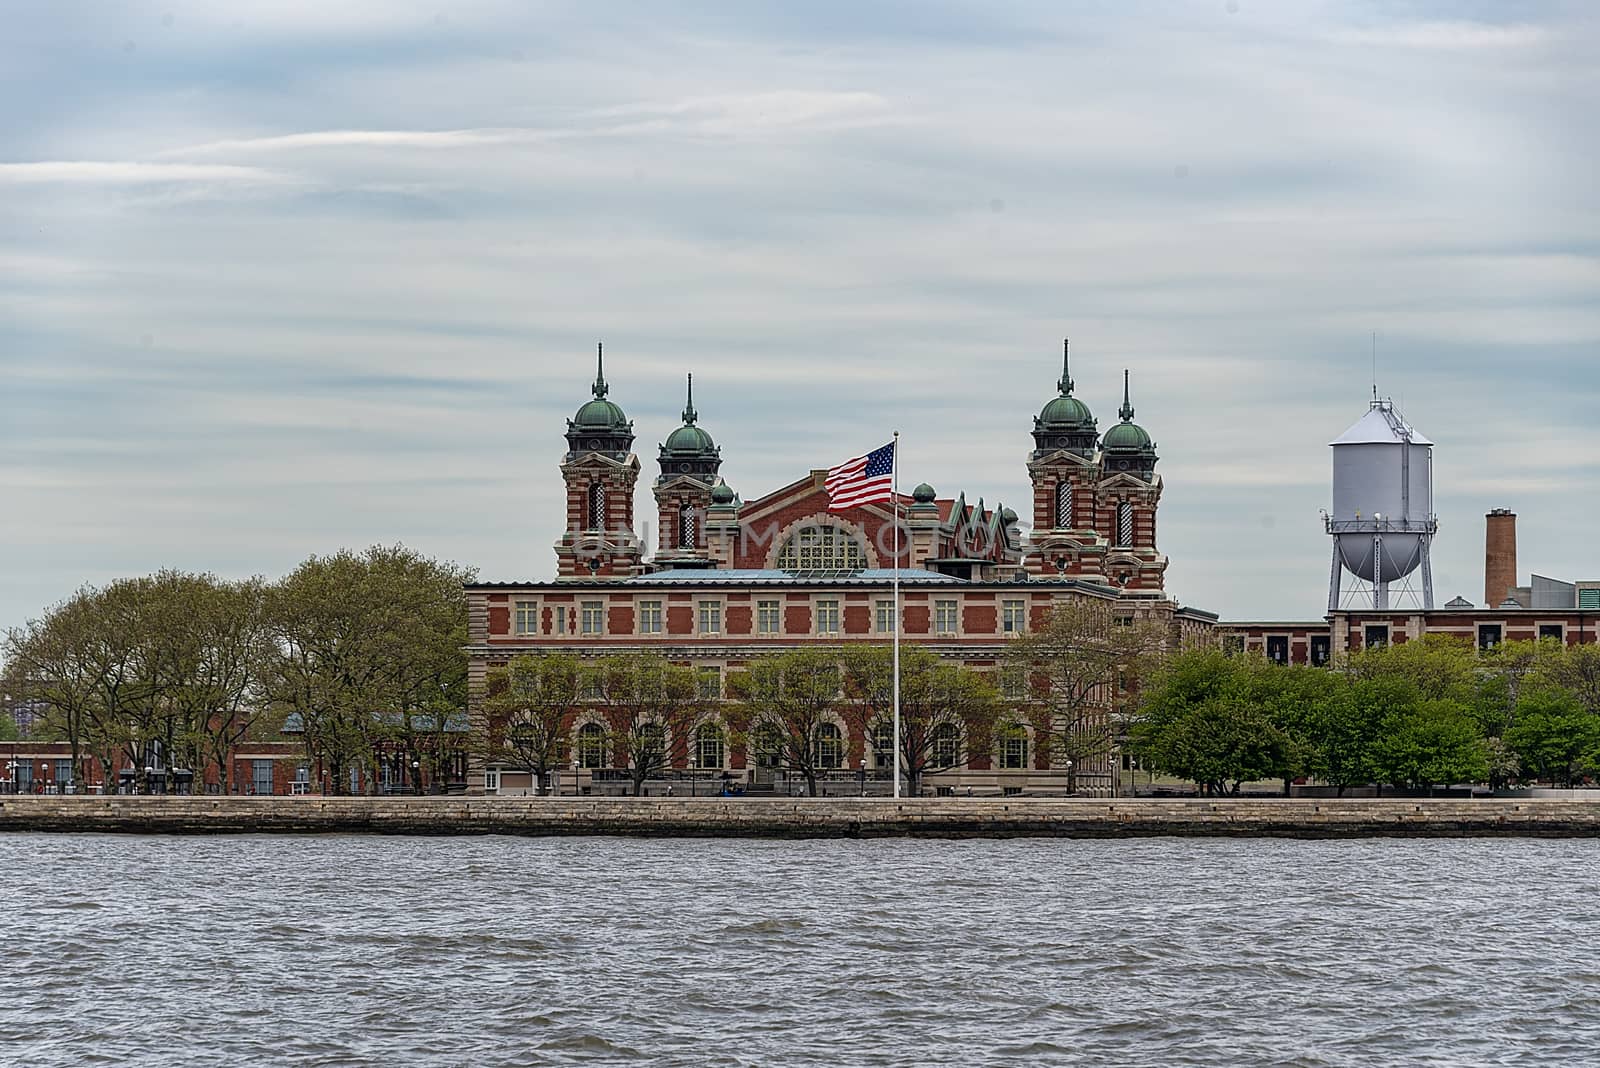 USA, New York - May 2019: Arrivals building at Ellis Island